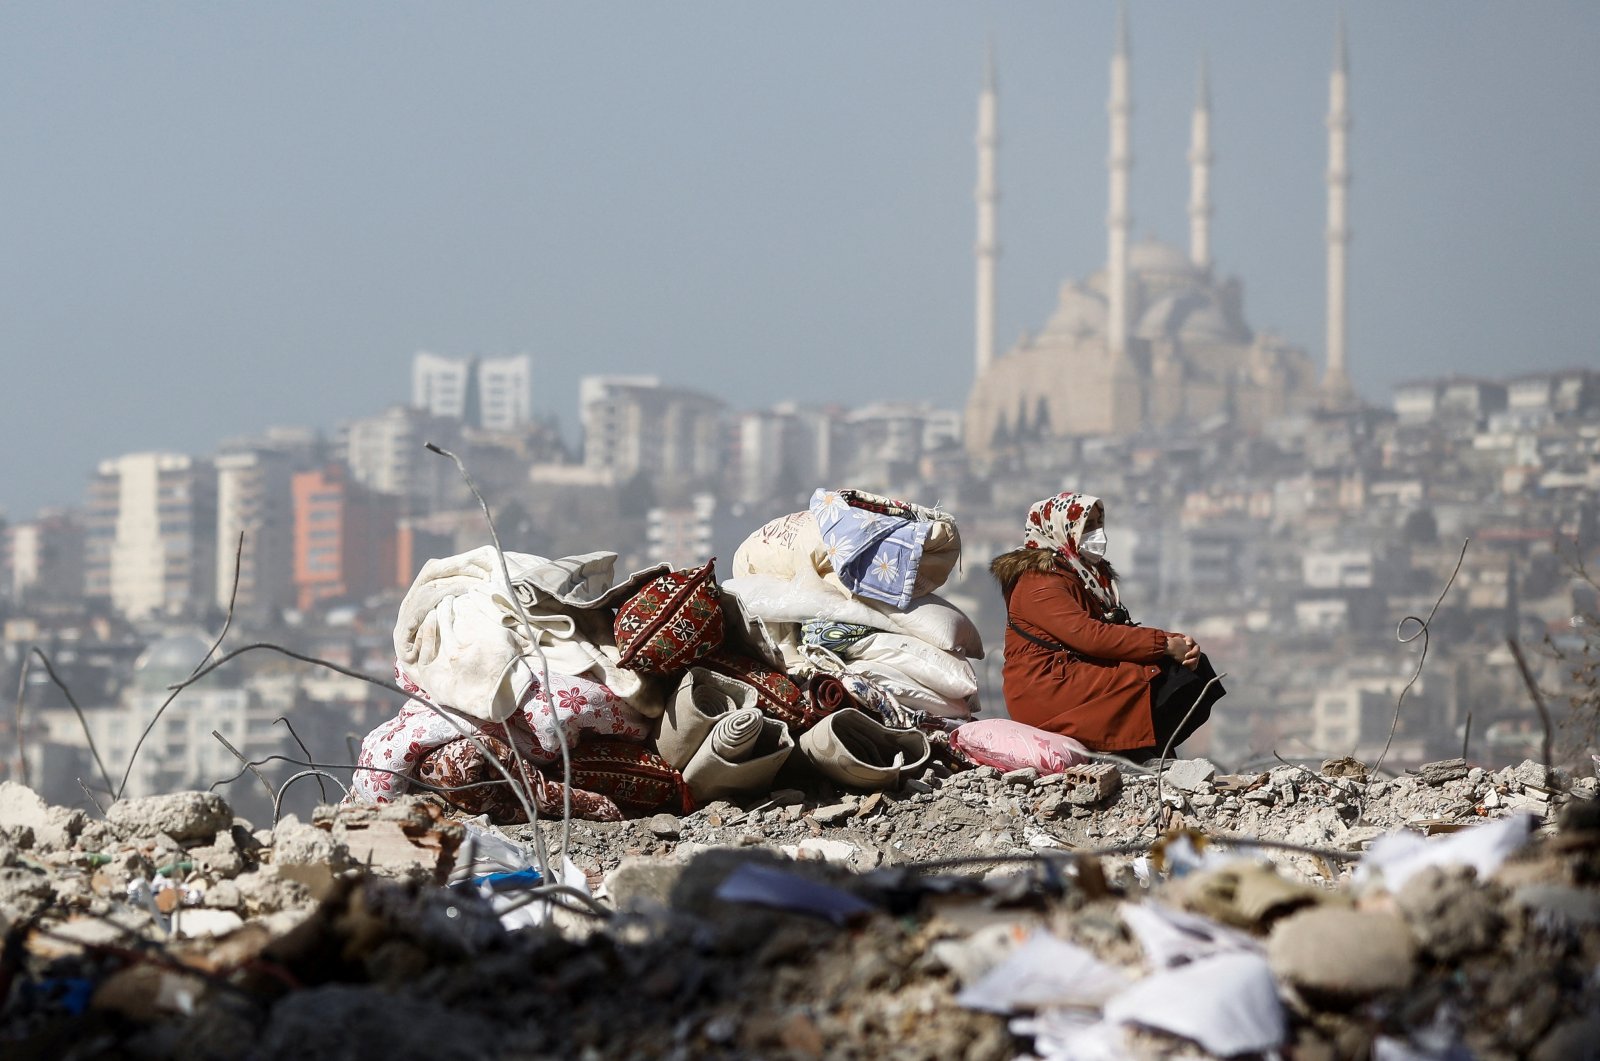 Gempa bumi Türkiye: Penyebab, efek, dan masa depan